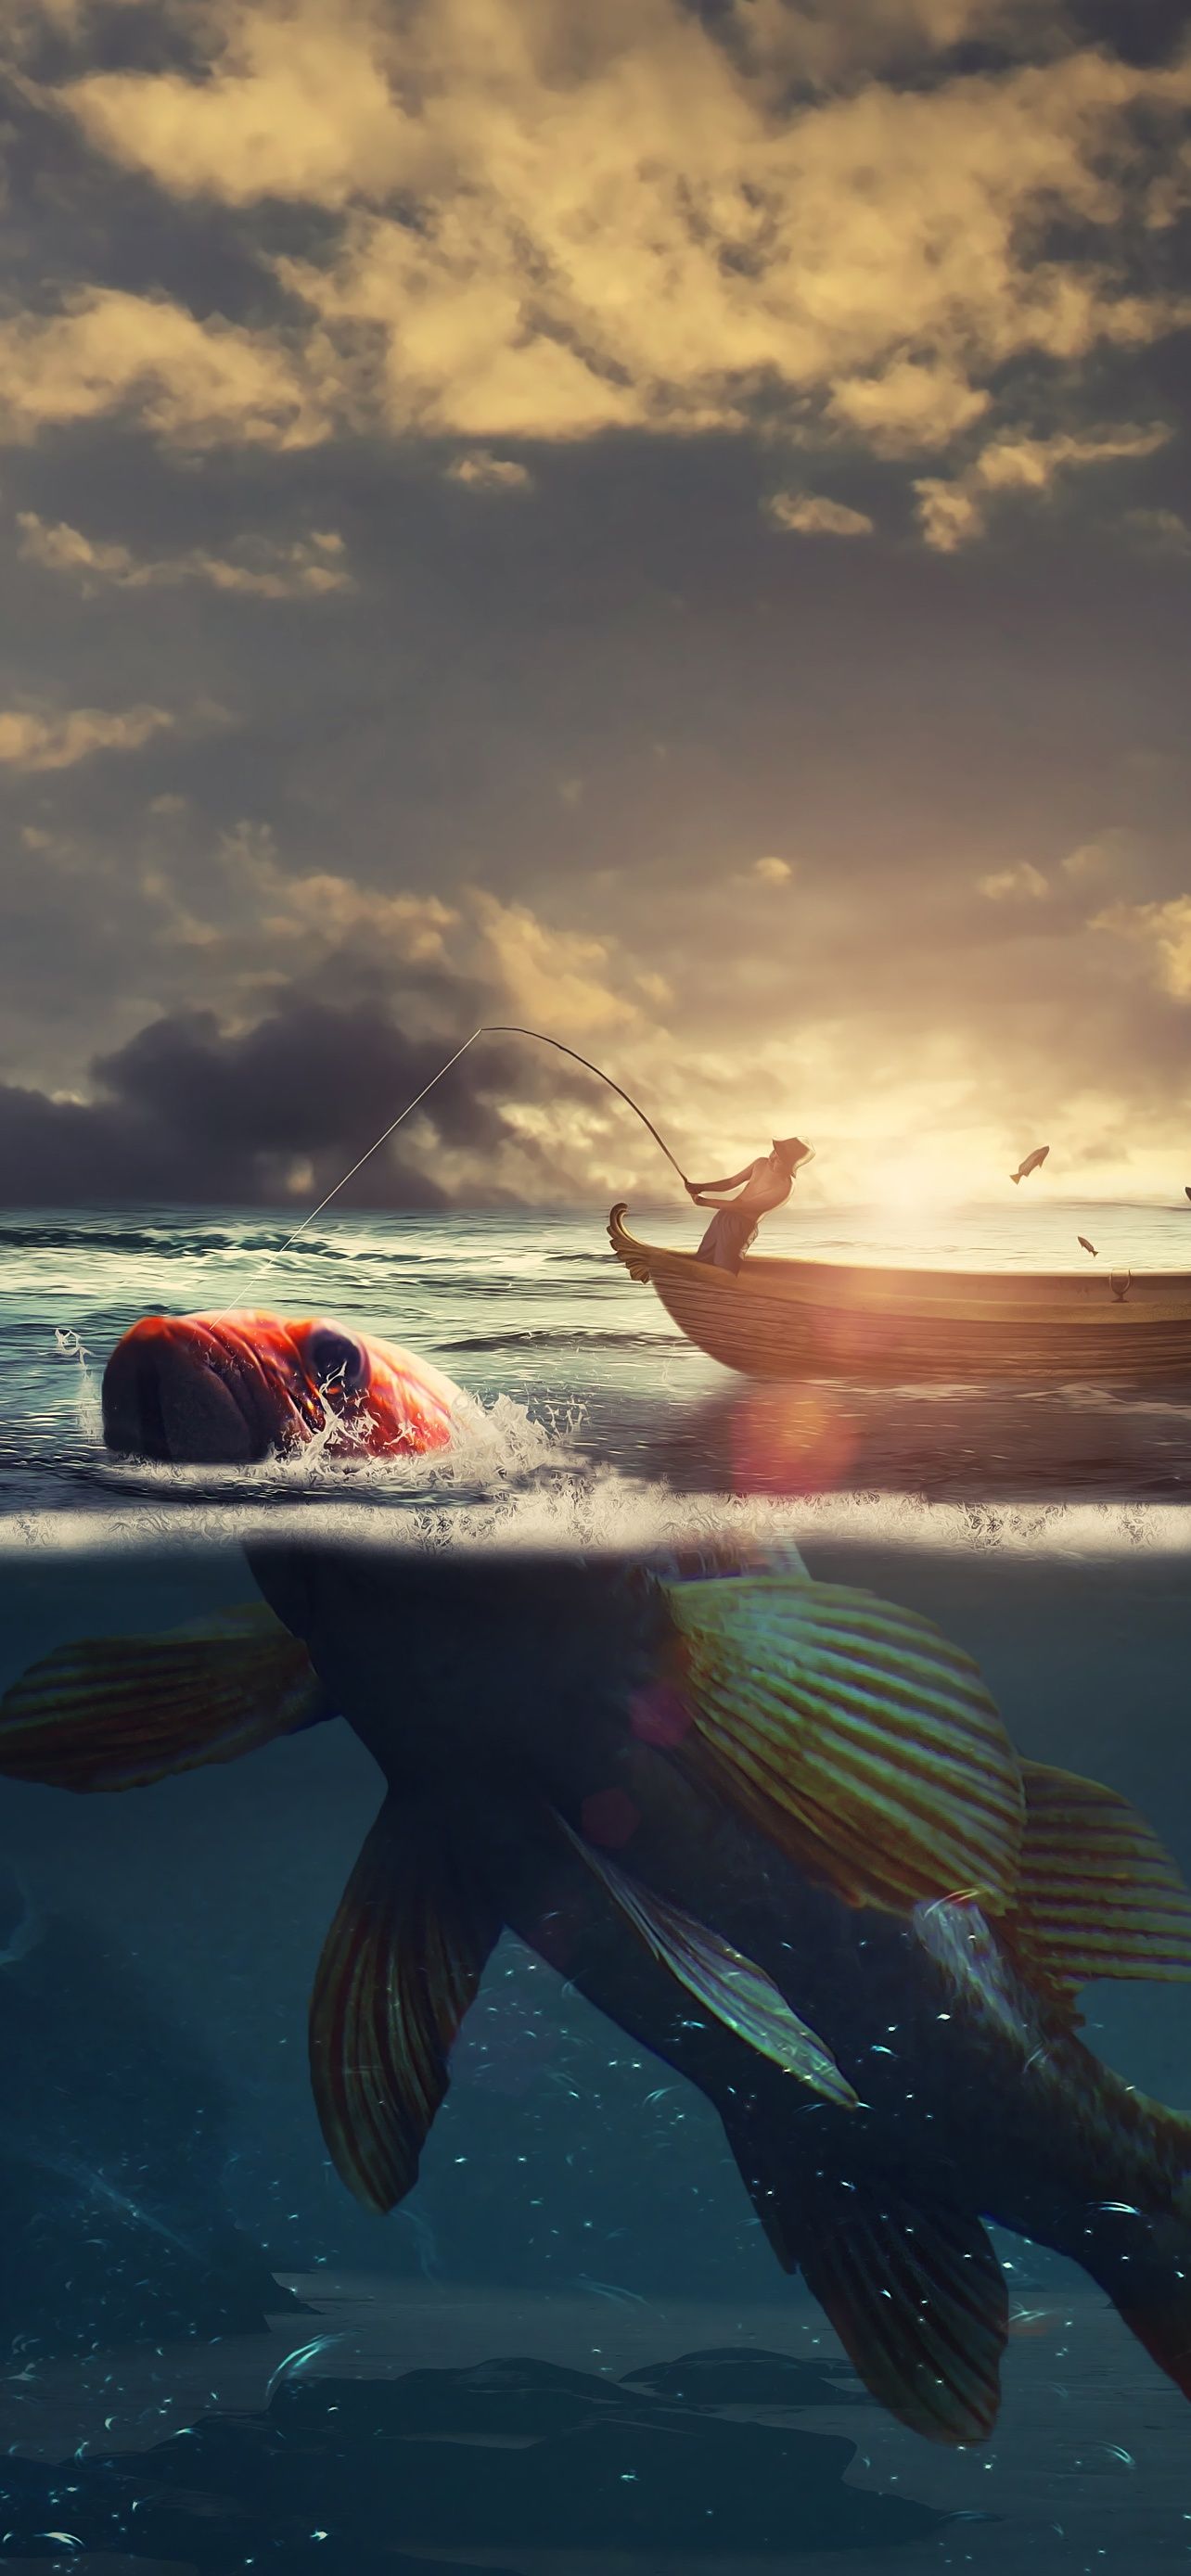 Surreal Wallpaper 4K, Fishing, Boat, Sea, Fantasy